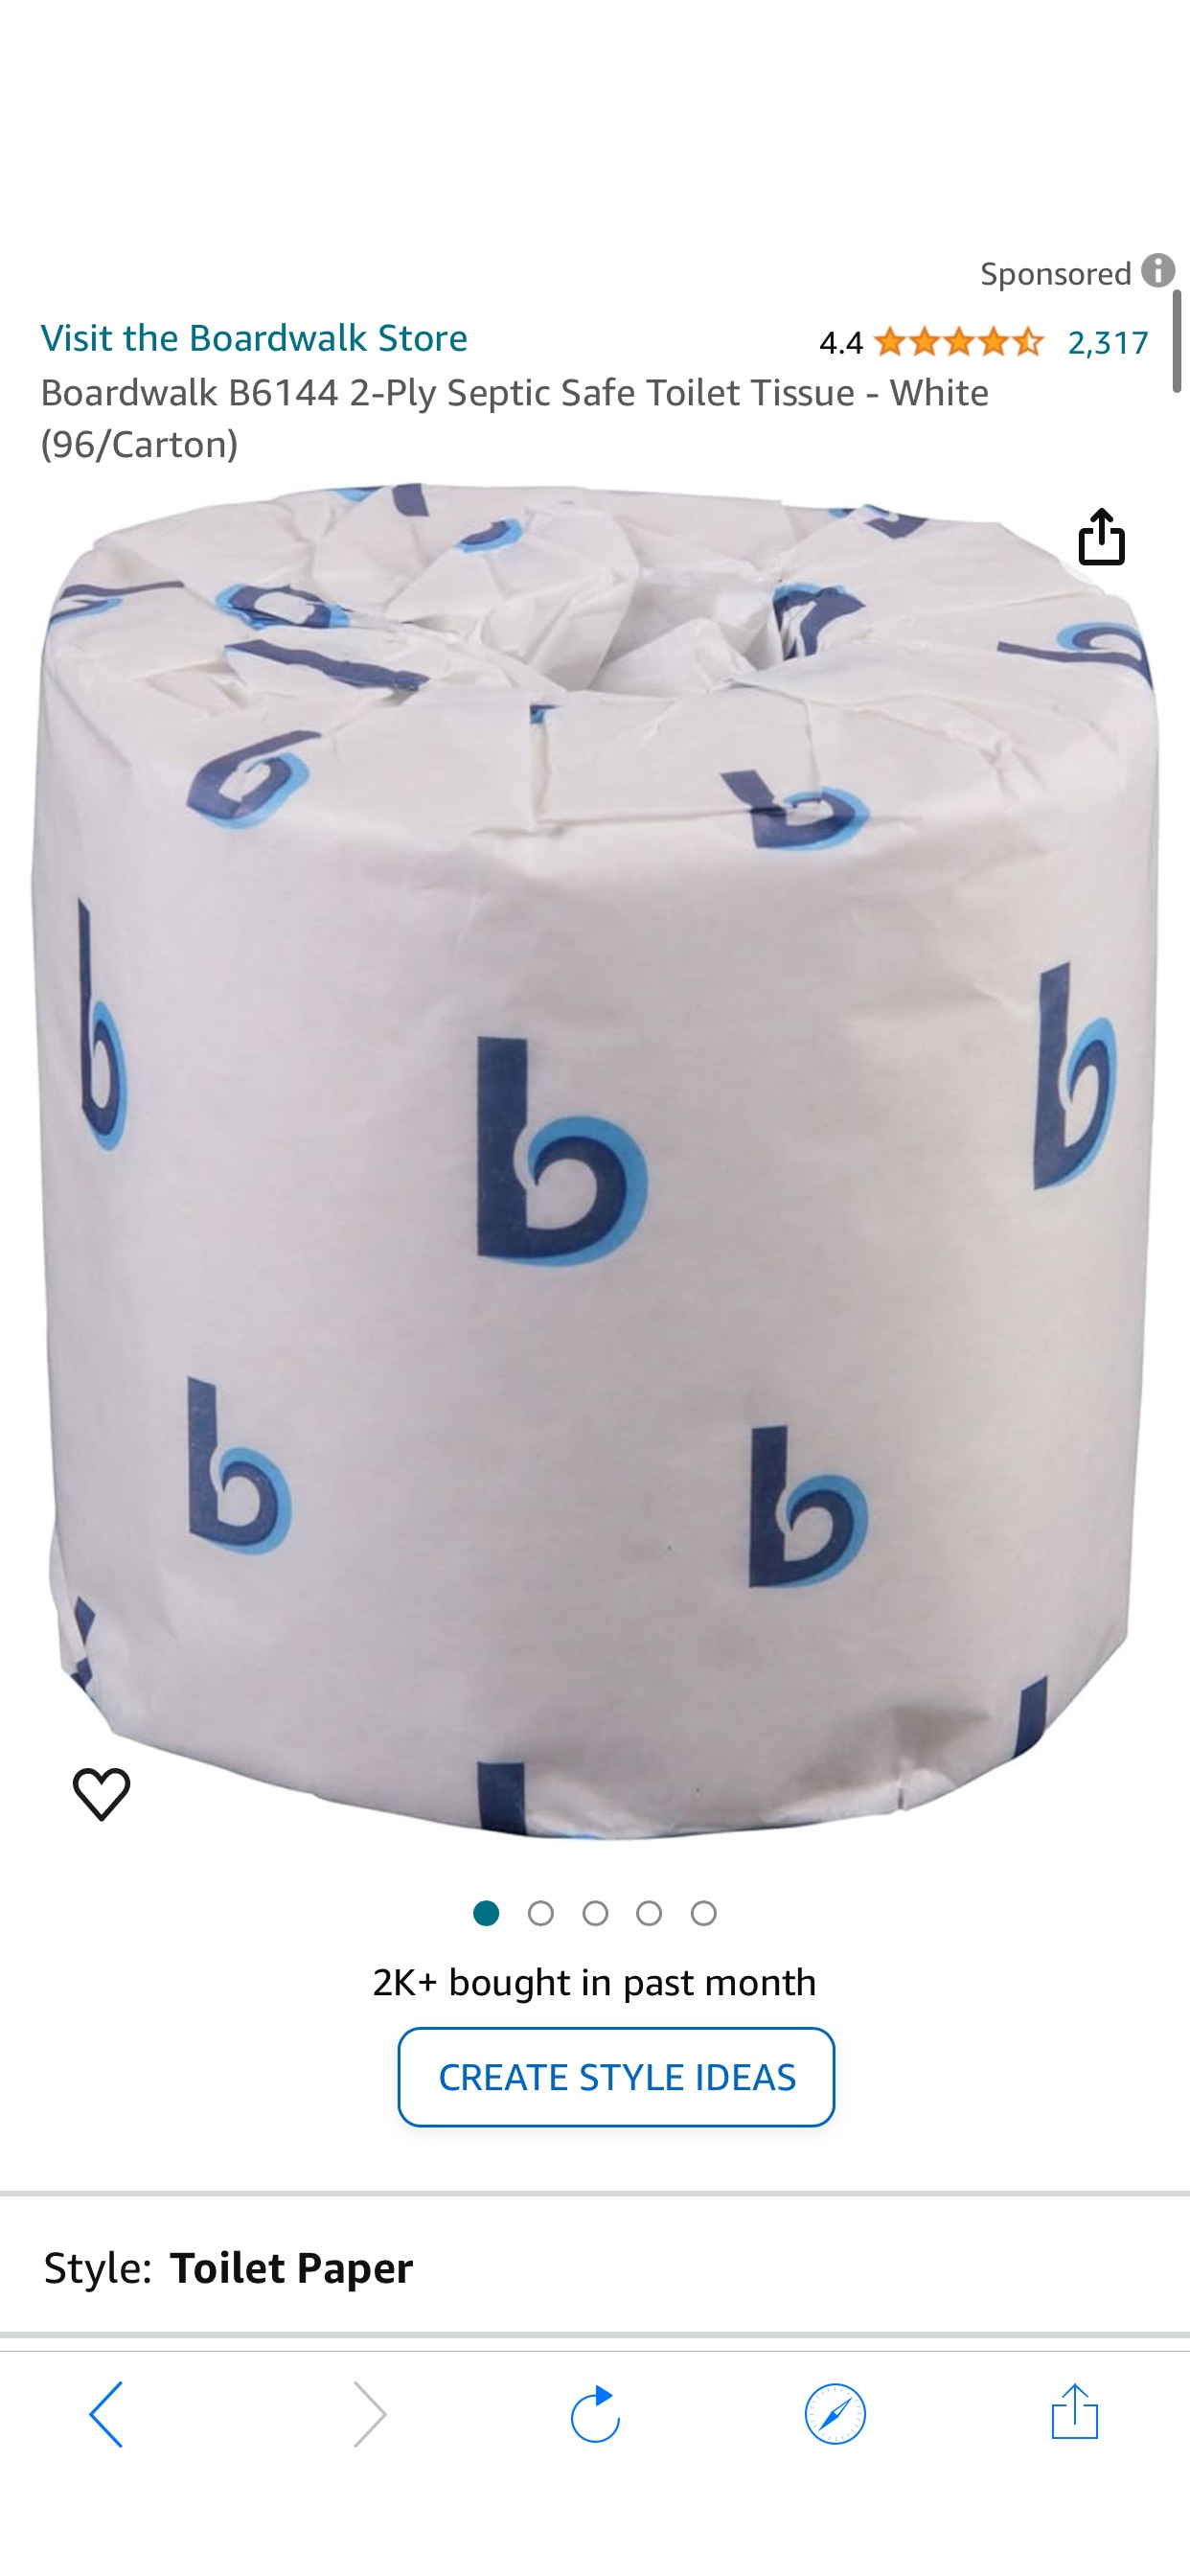 Amazon.com: Boardwalk B6144 2-Ply Septic Safe Toilet Tissue - White (96/Carton) : Health & Household 卫生纸96卷